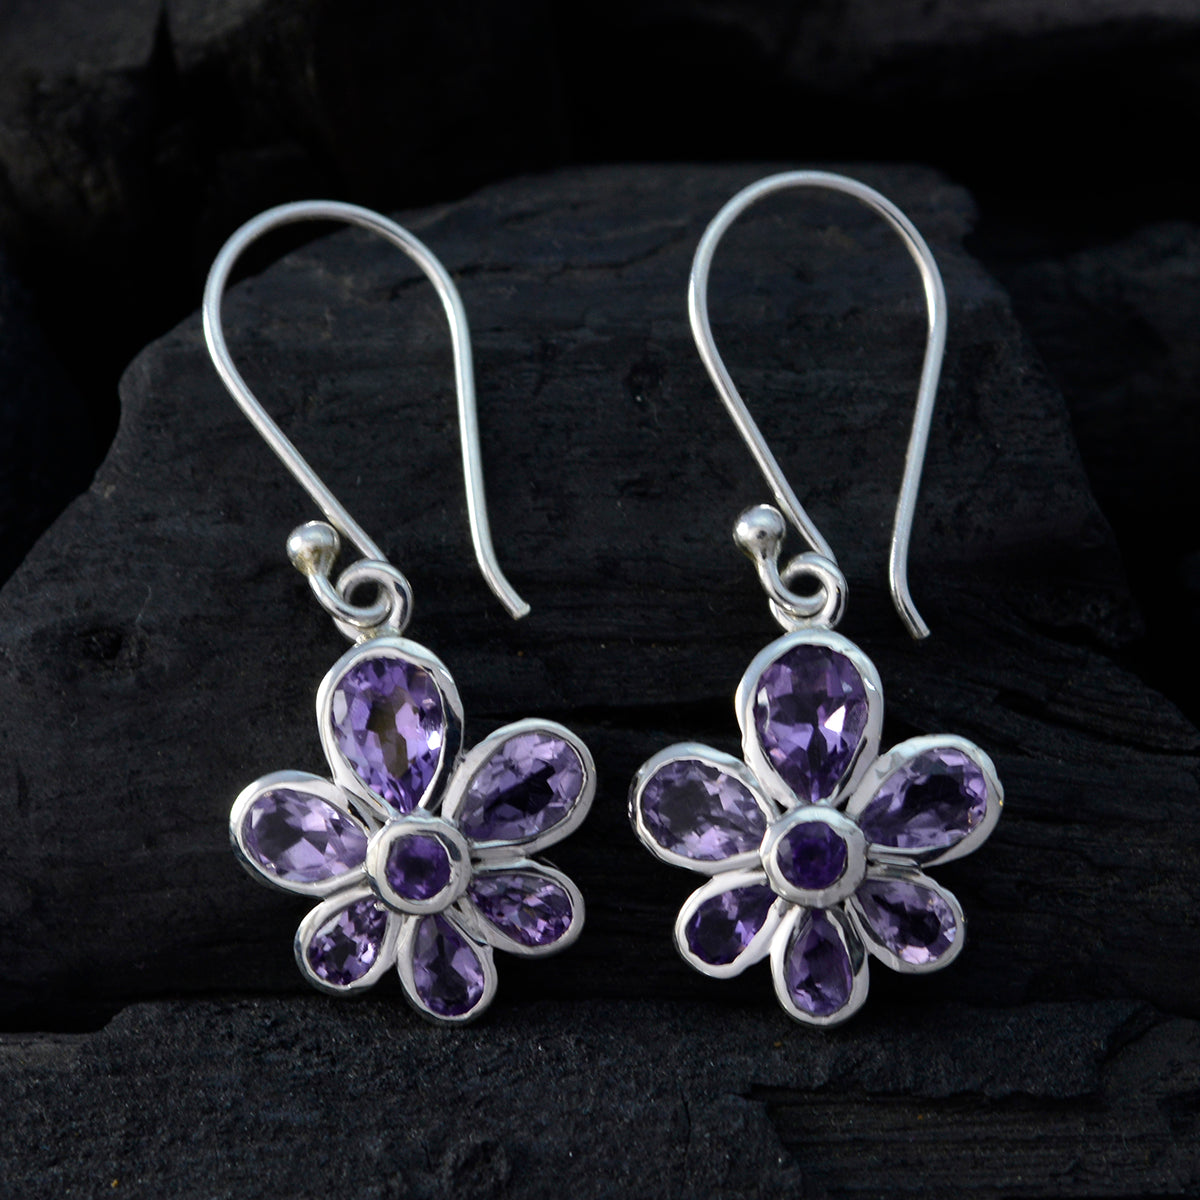 Riyo Natural Gemstone multi shape Faceted Purple Amethyst Silver Earrings cyber Monday gift